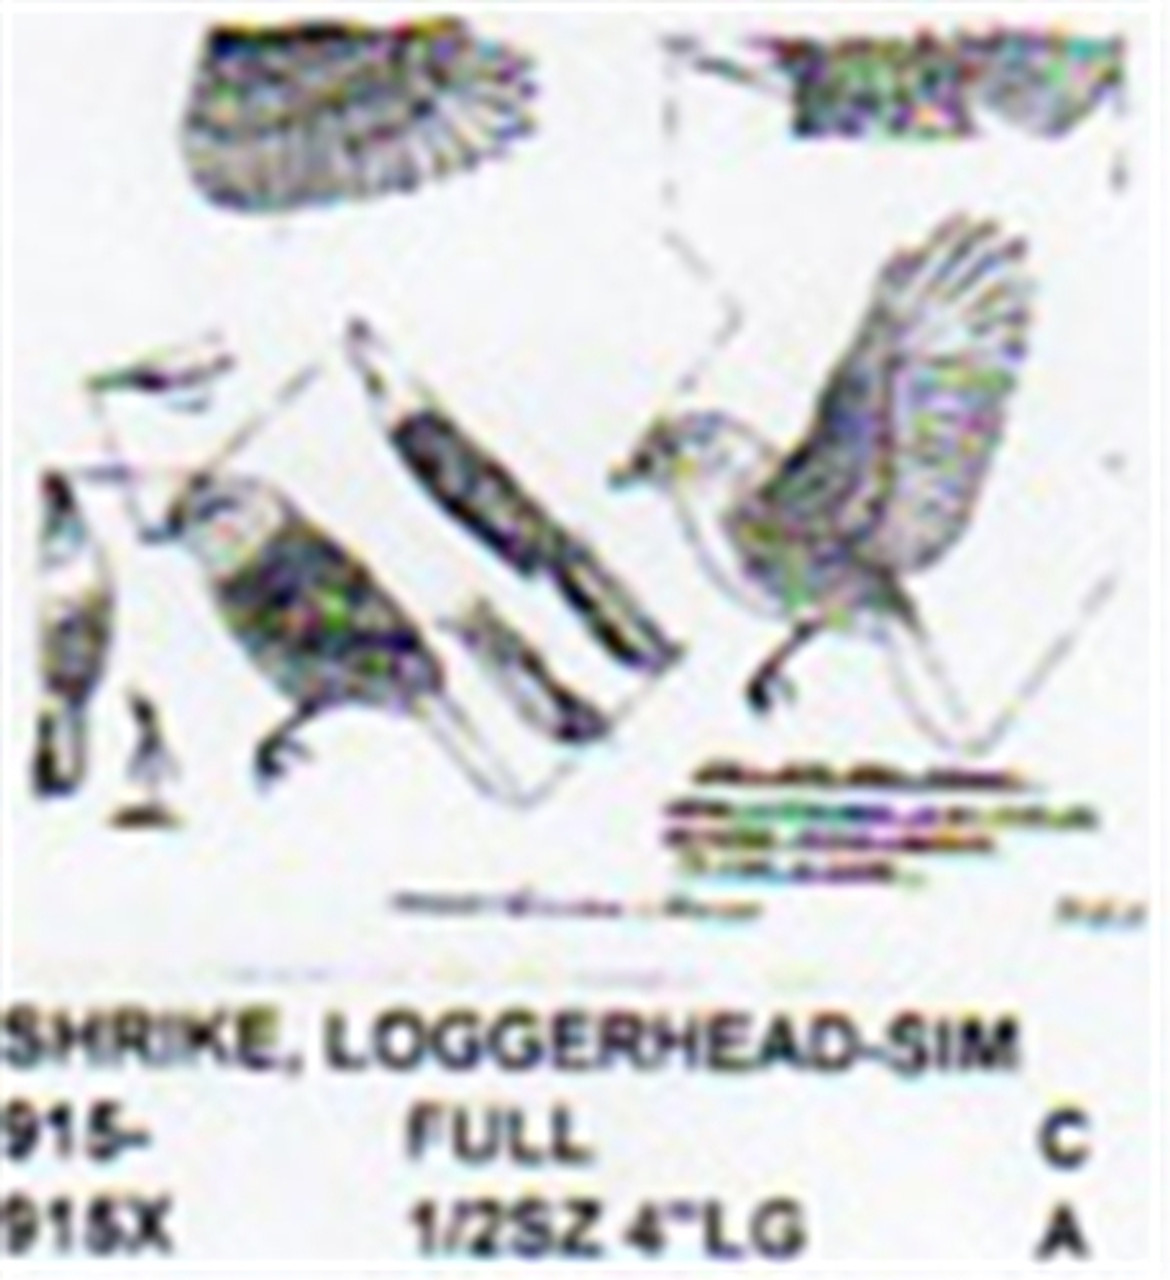 Logger Head Shrike 1/2 size